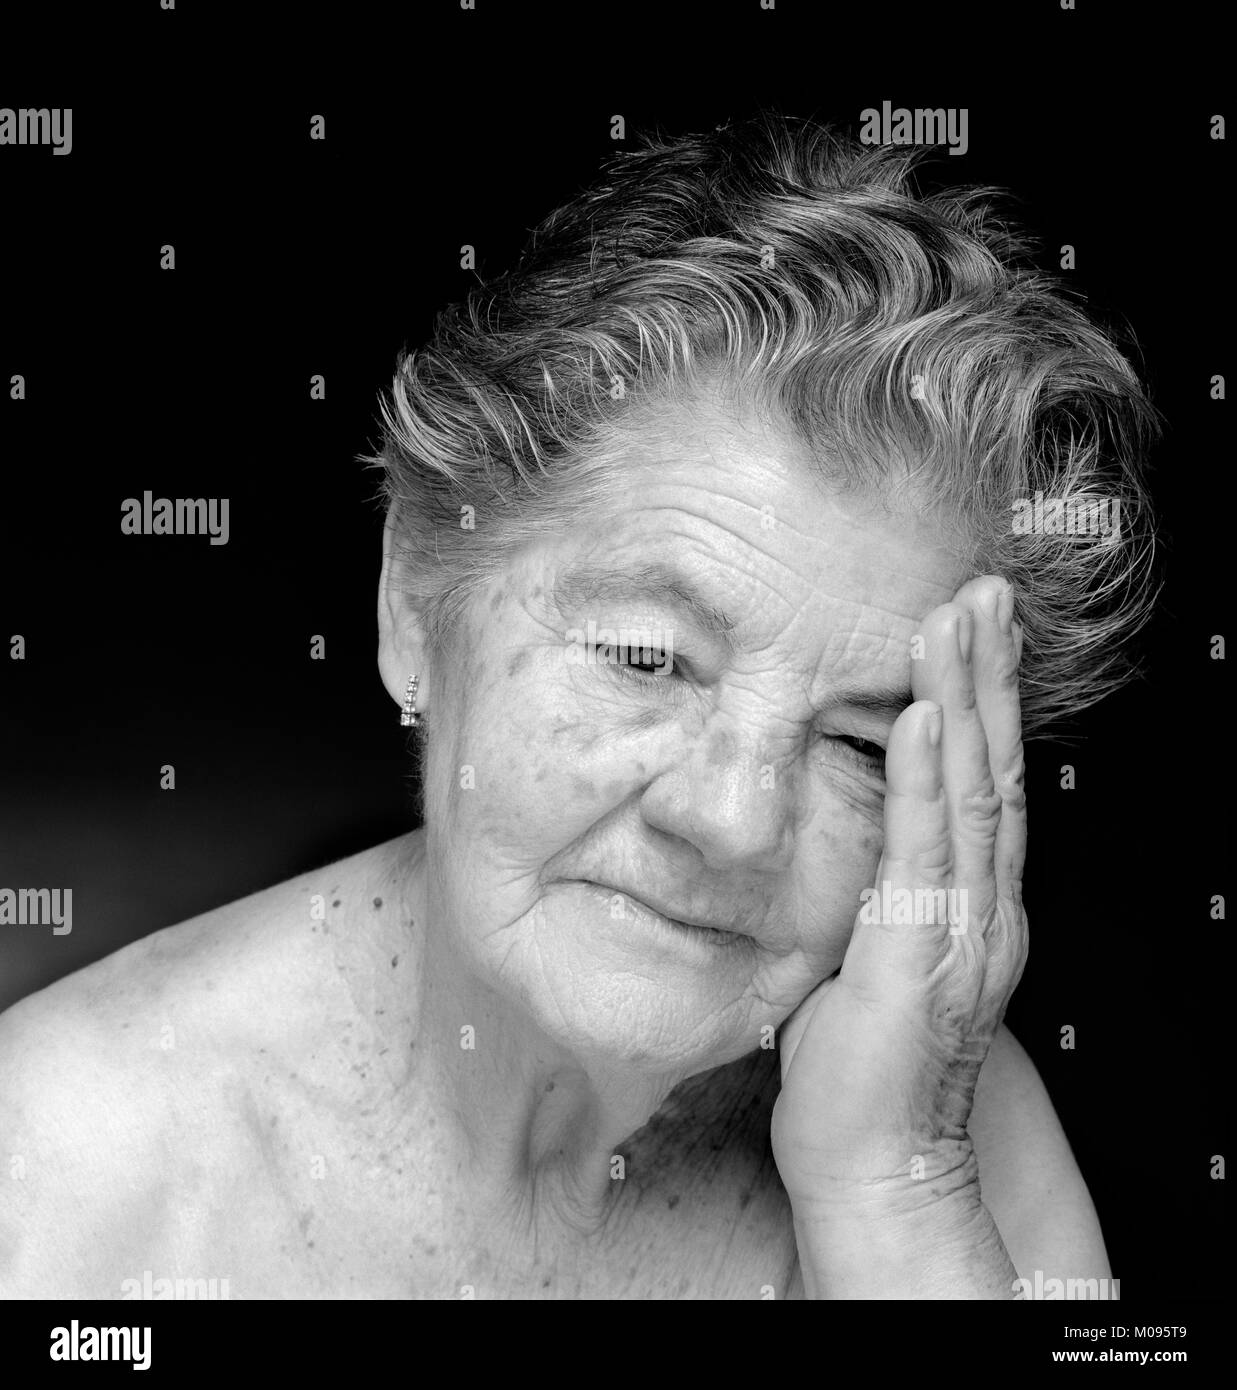 Black and white portrait of melancholic and meditative elderly woman against black background Stock Photo